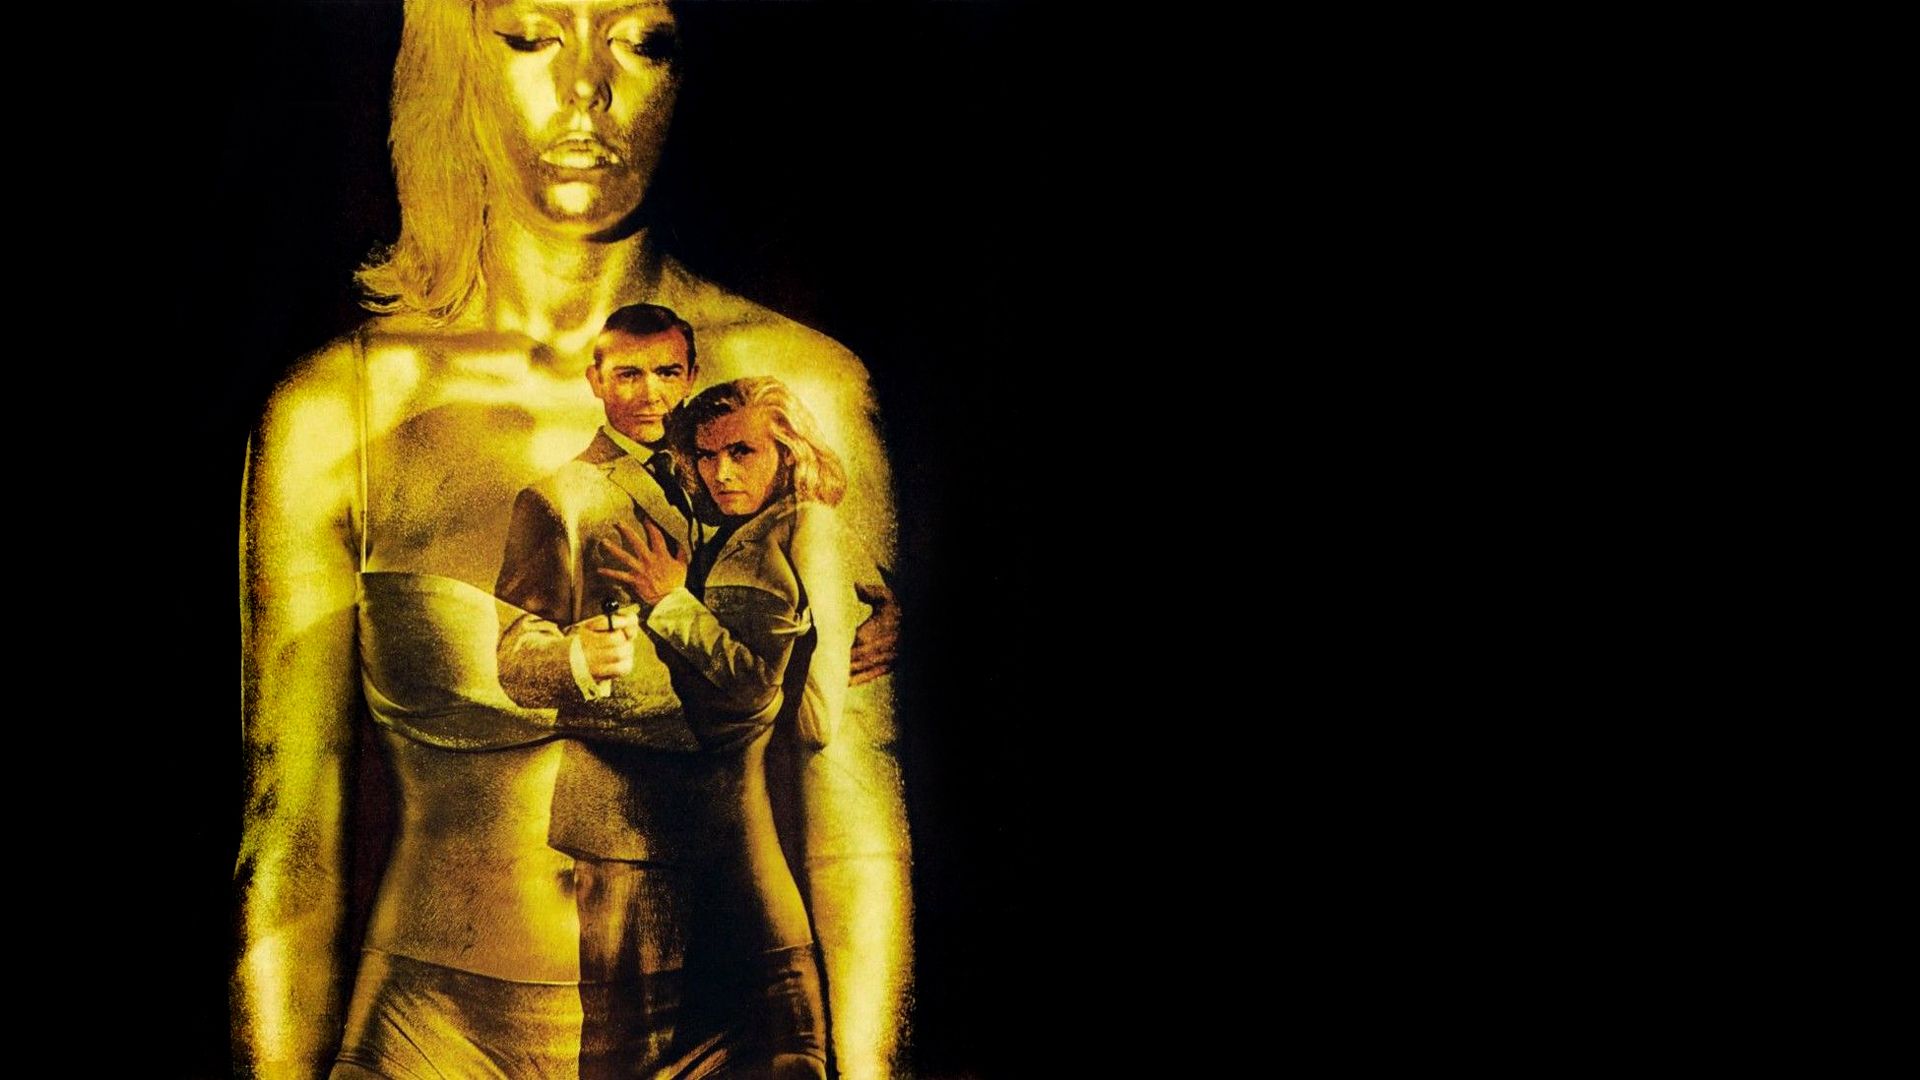 Goldfinger background